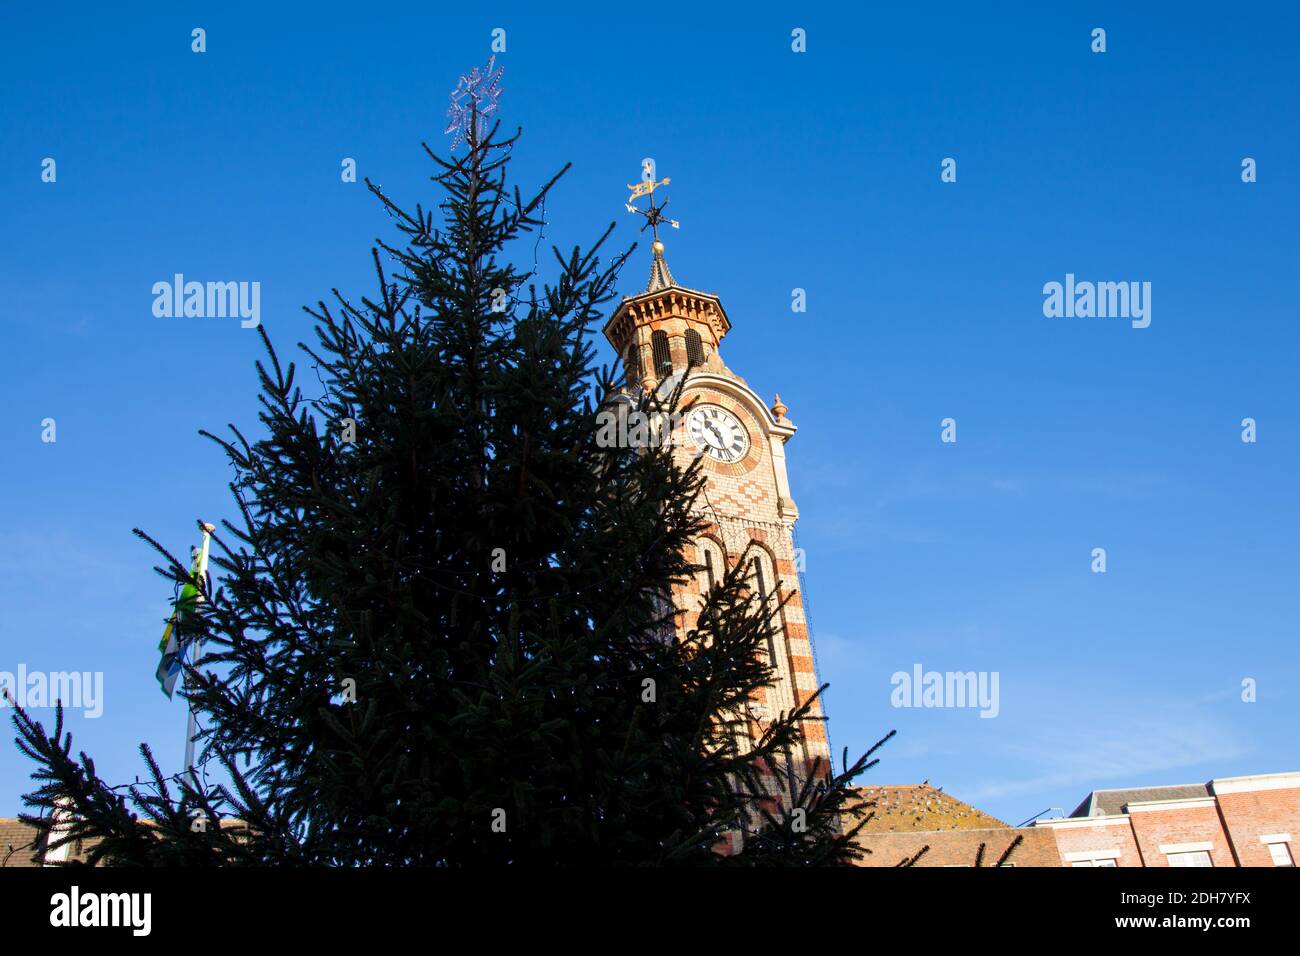 Epsom clock tower with Xmas tree at Christmas in Epsom, Surrey, UK, December 2020 Stock Photo